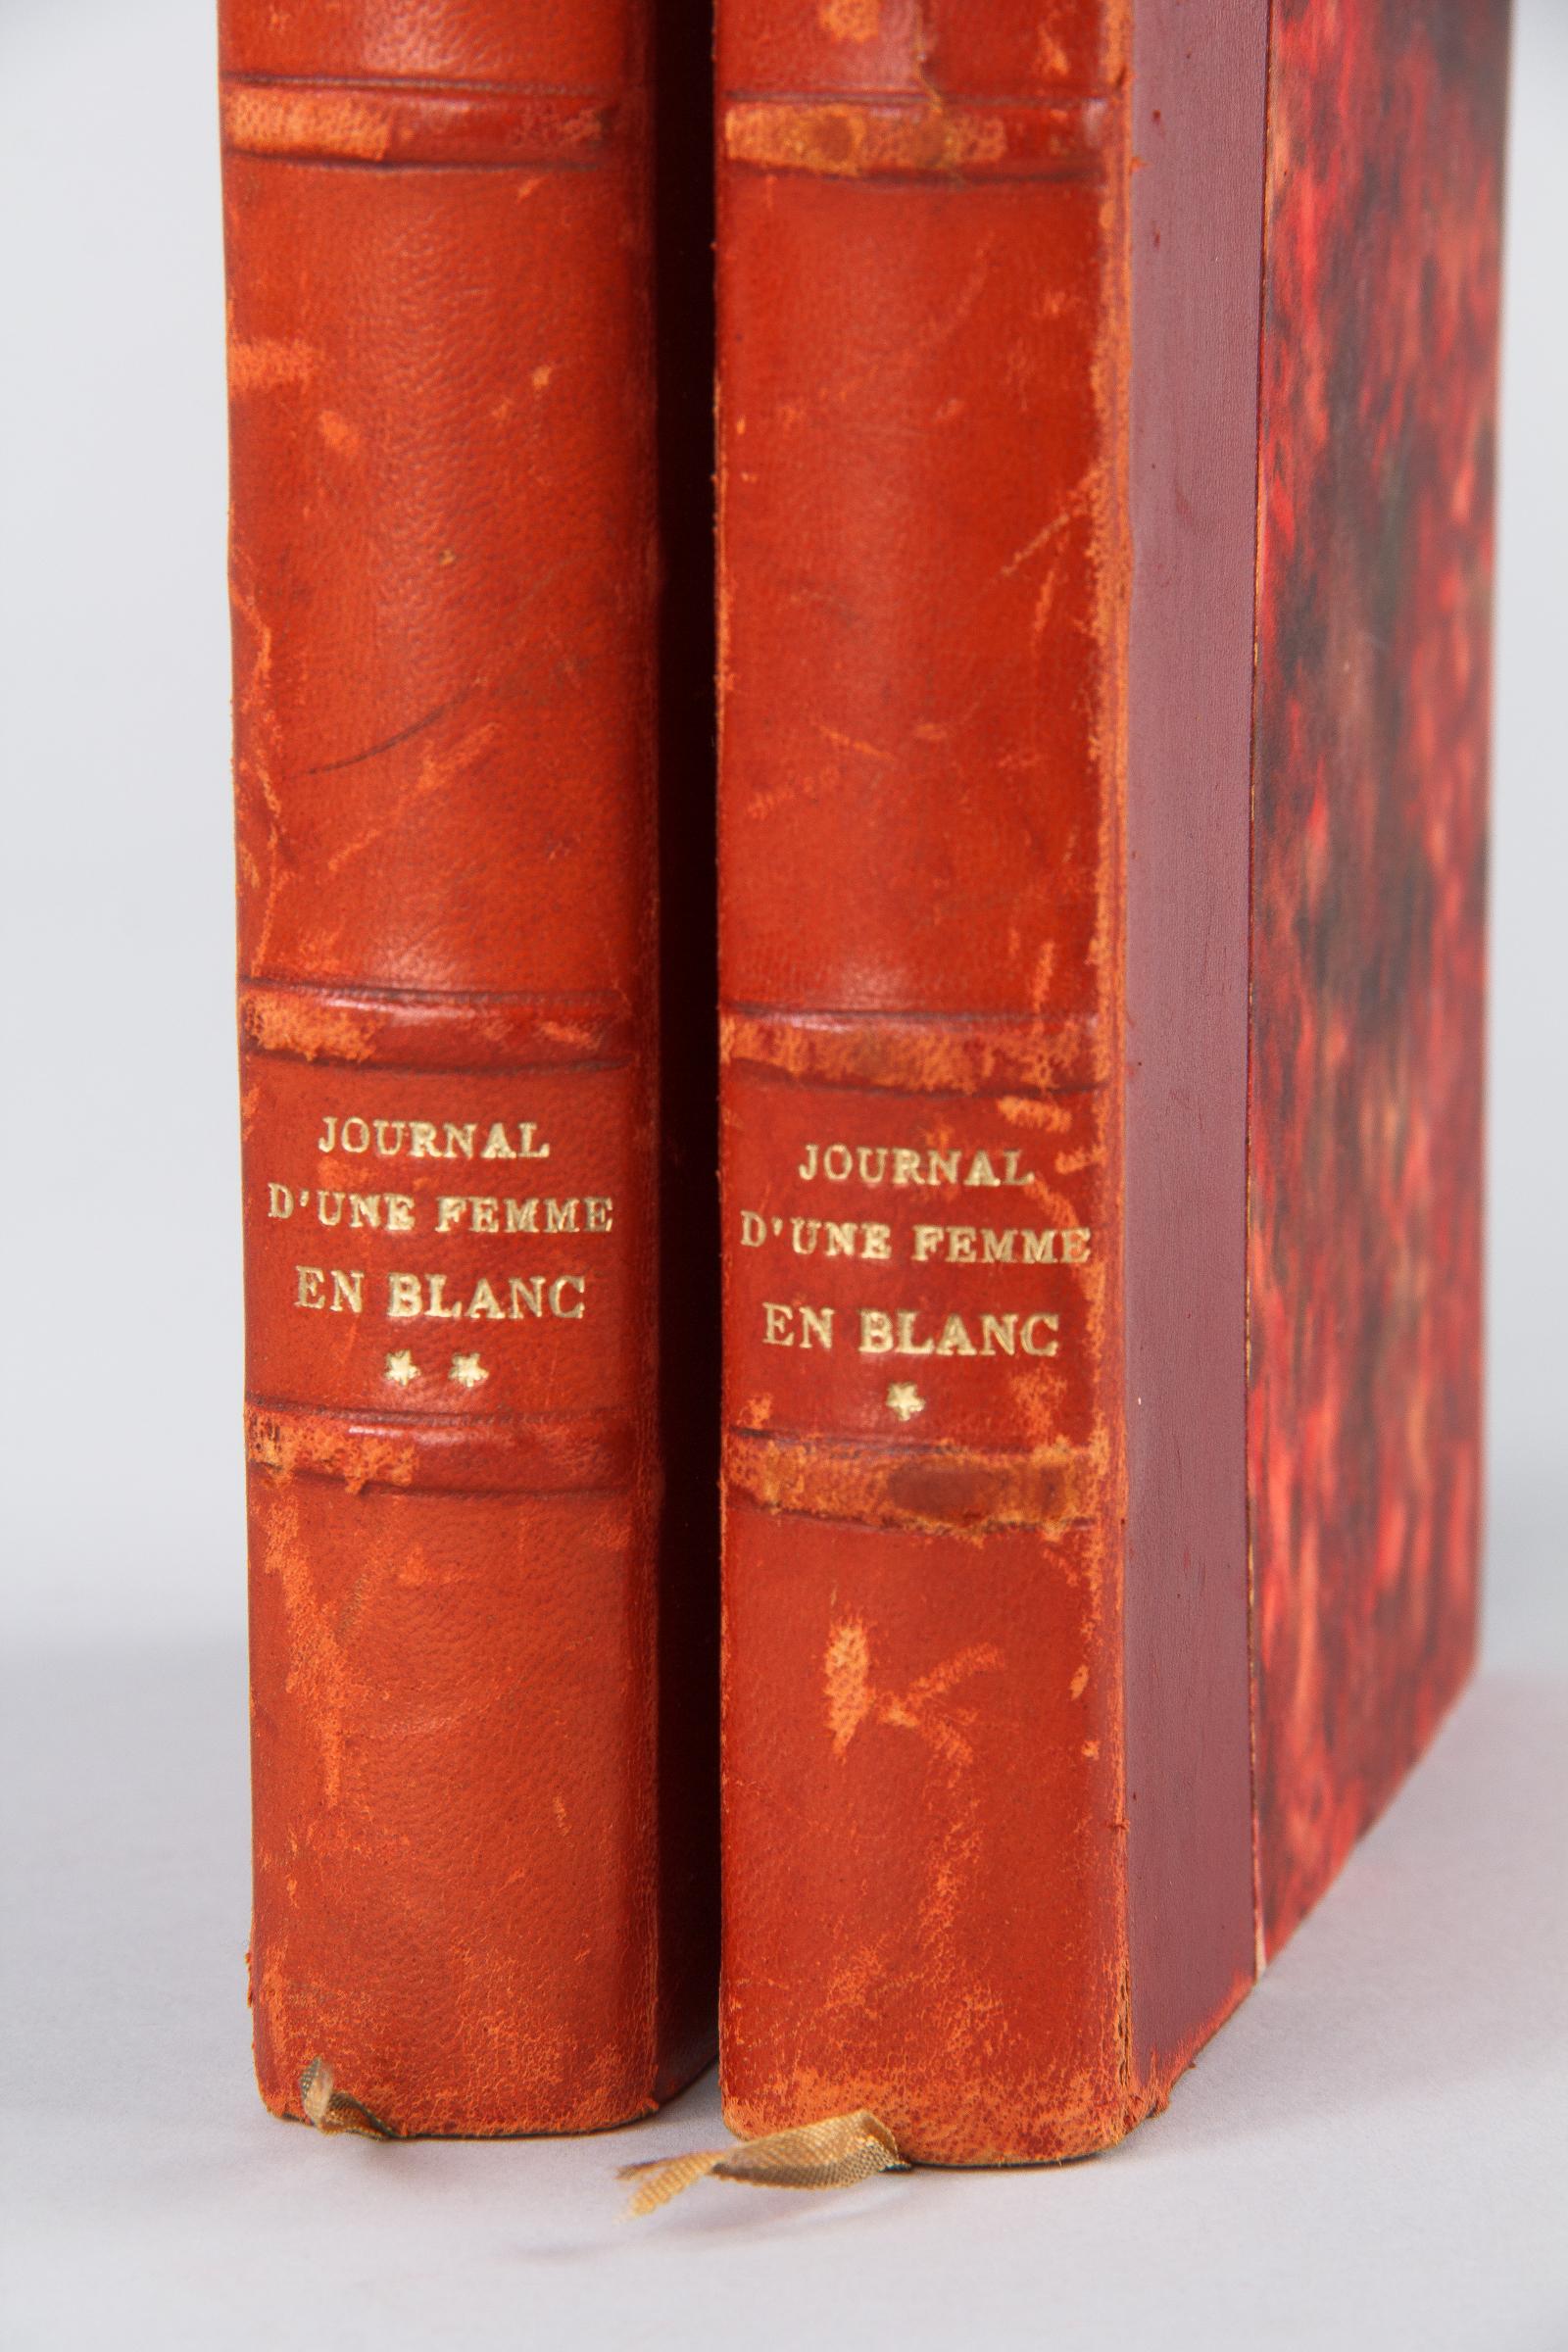 Mid-20th Century French Books, Journal d'Une Femme en Blanc by Andre Soubiran, 1964